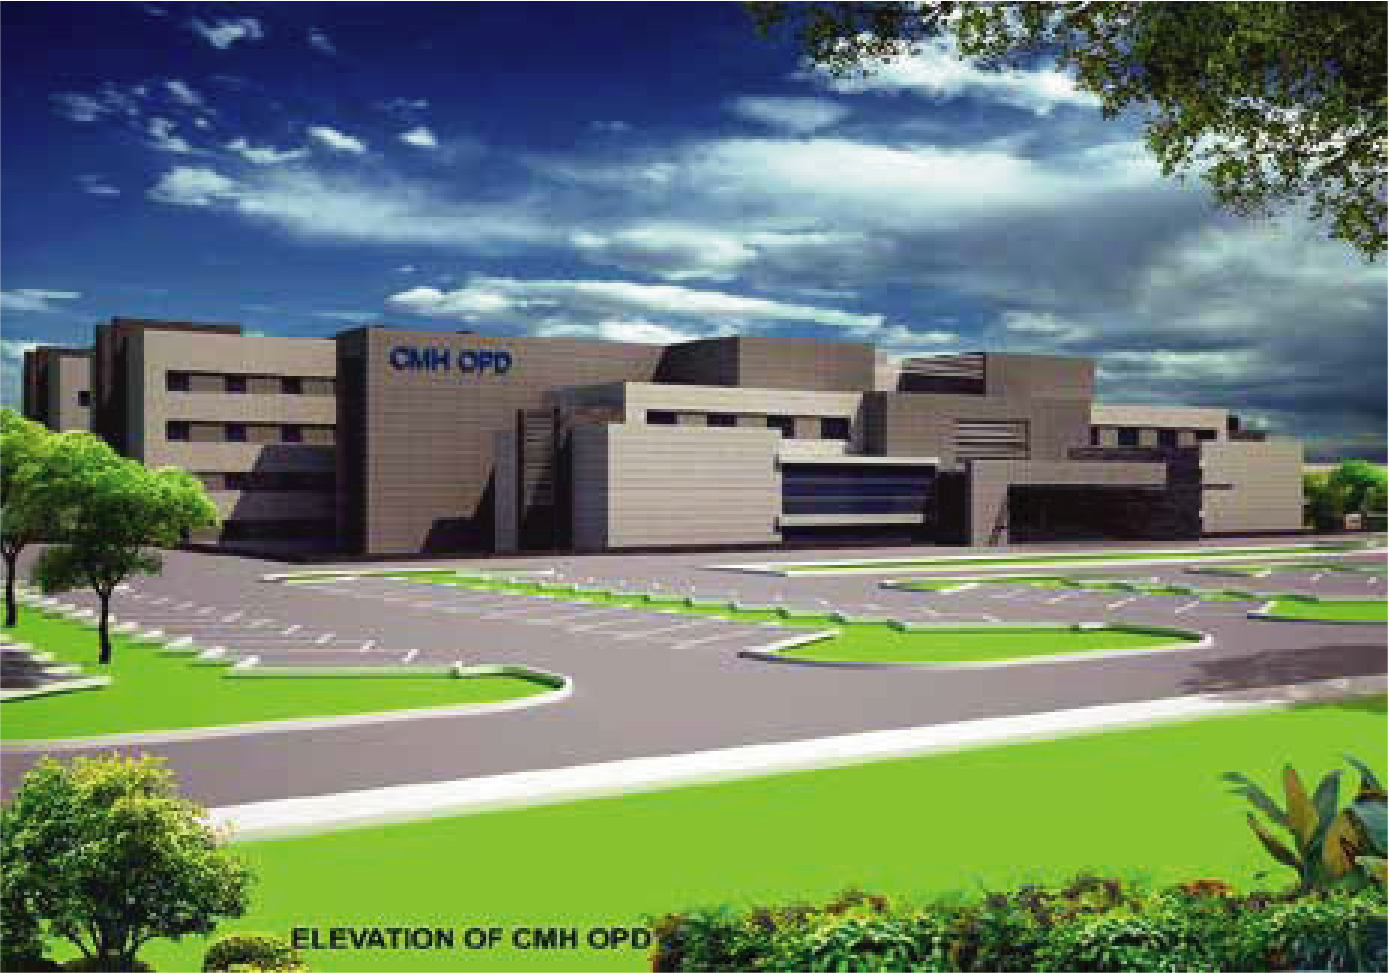 Combined Military Hospital (CMH)